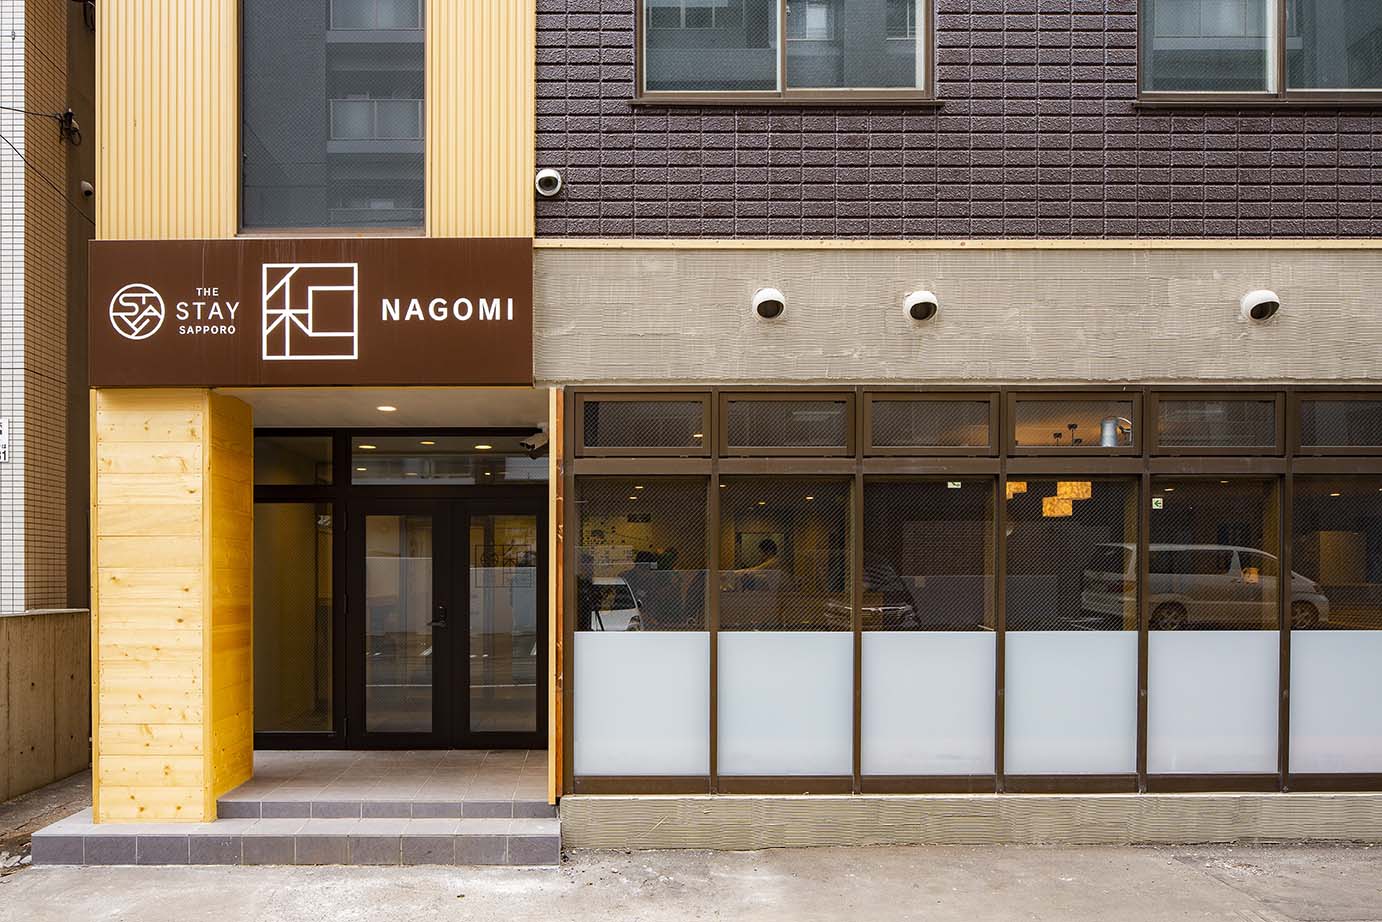 The Stay Sapporo Nagomi